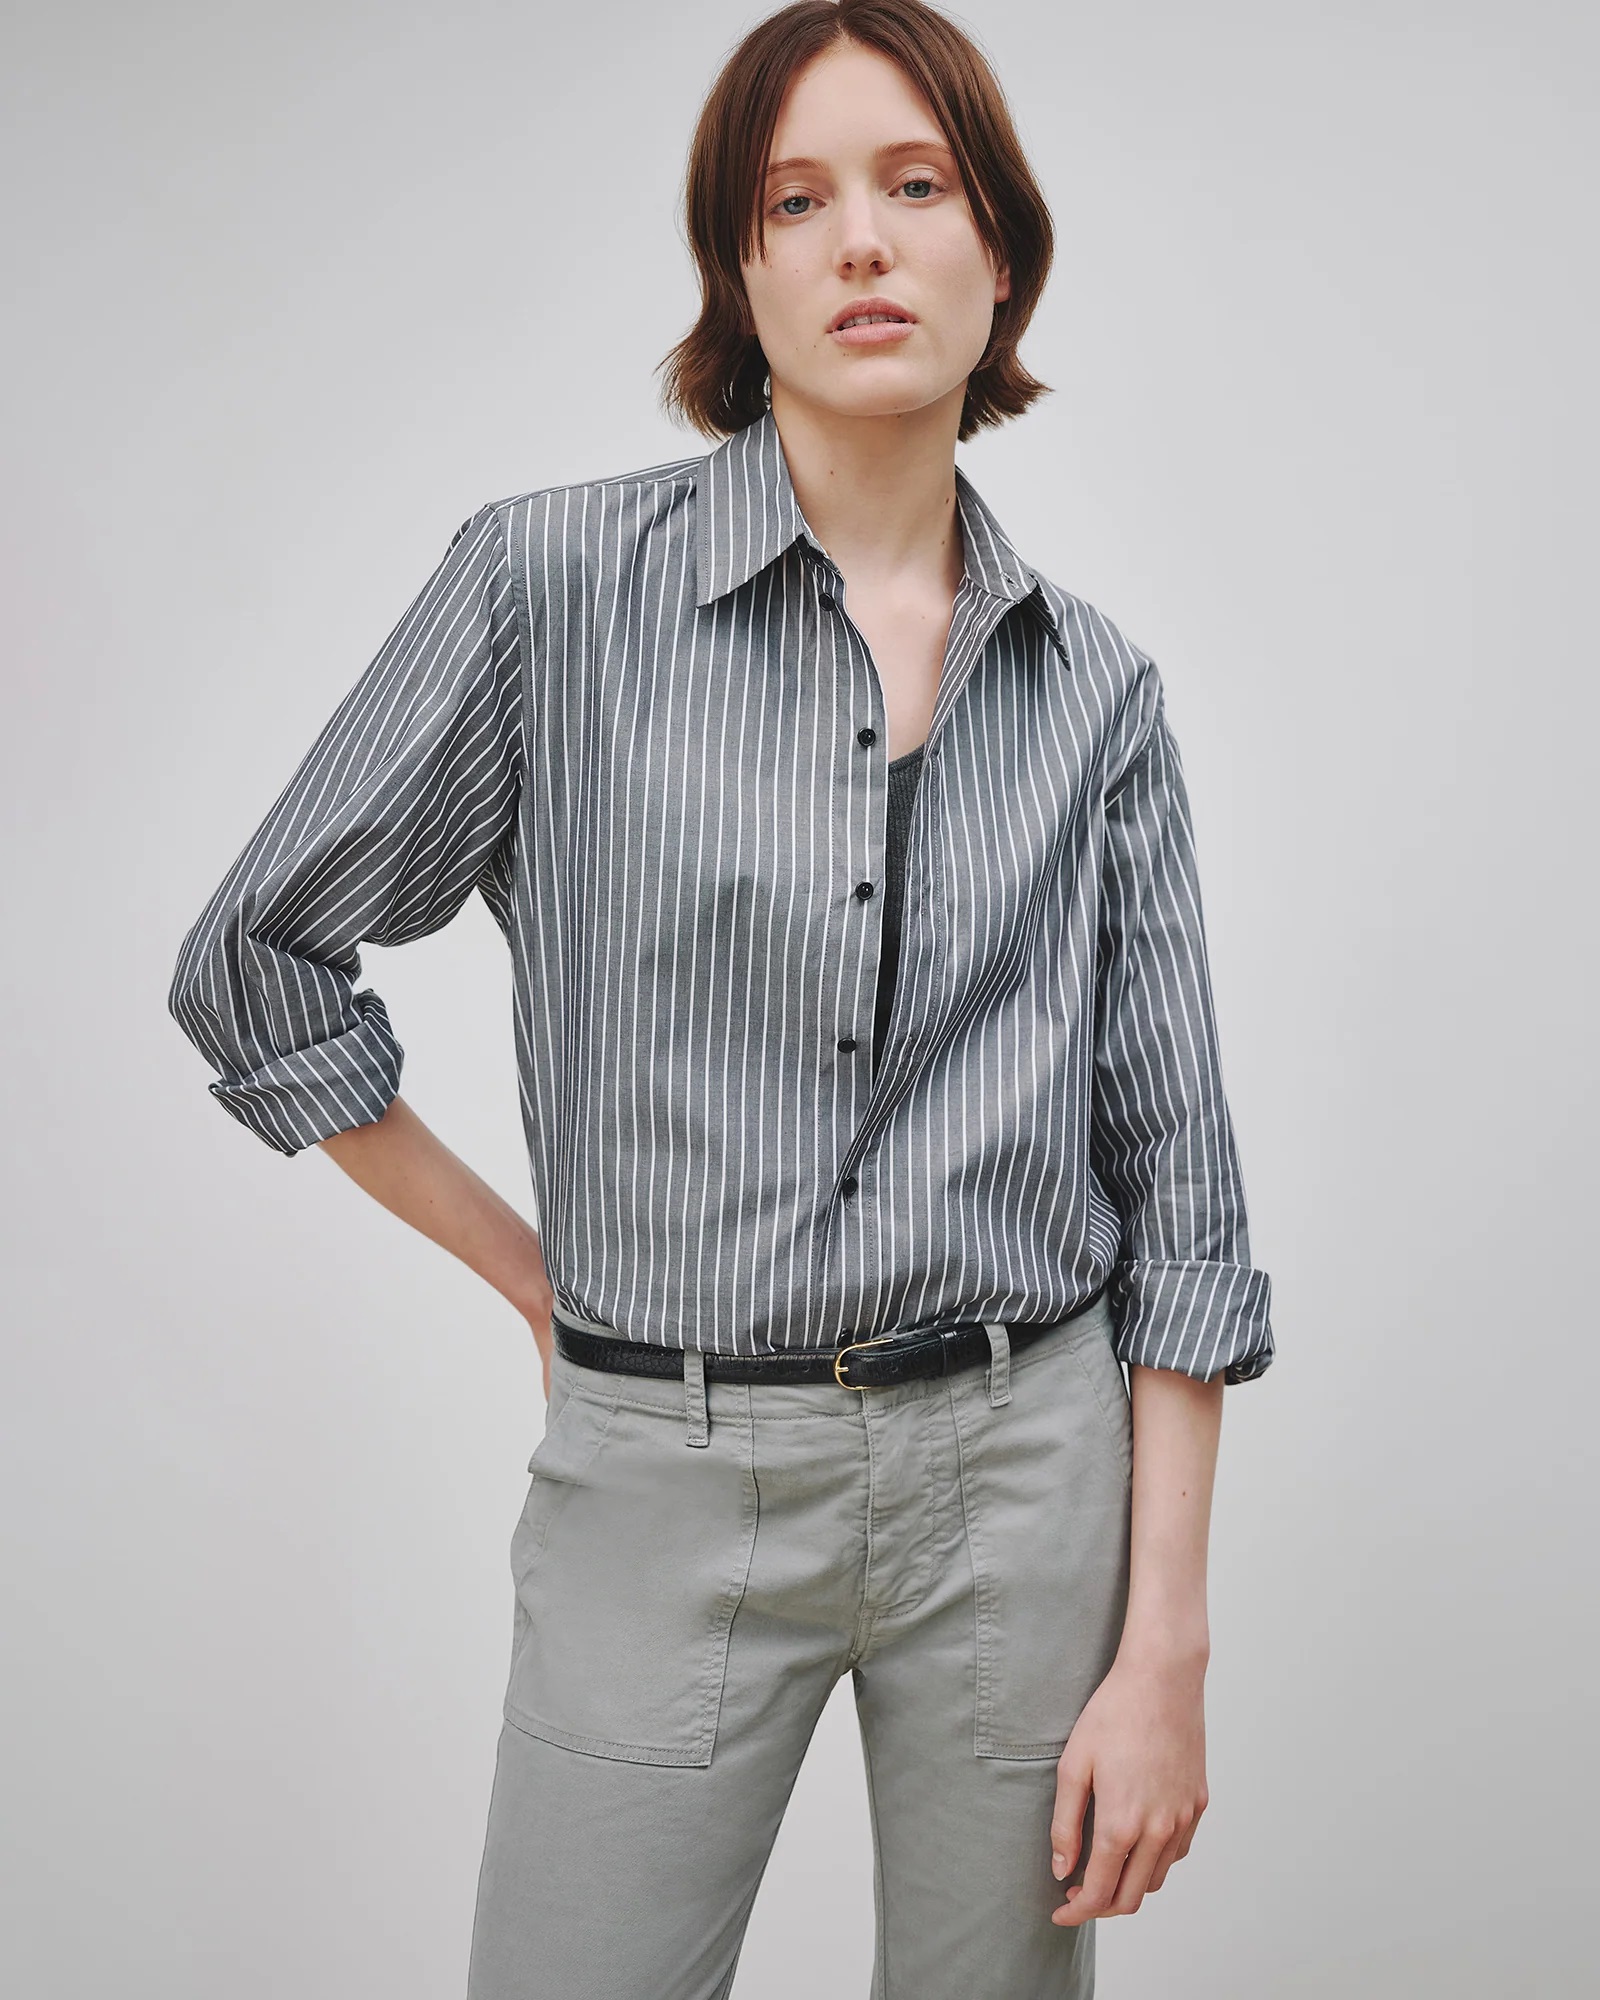 NILI LOTAN Raphael Classic Shirt in Black/White Stripe M